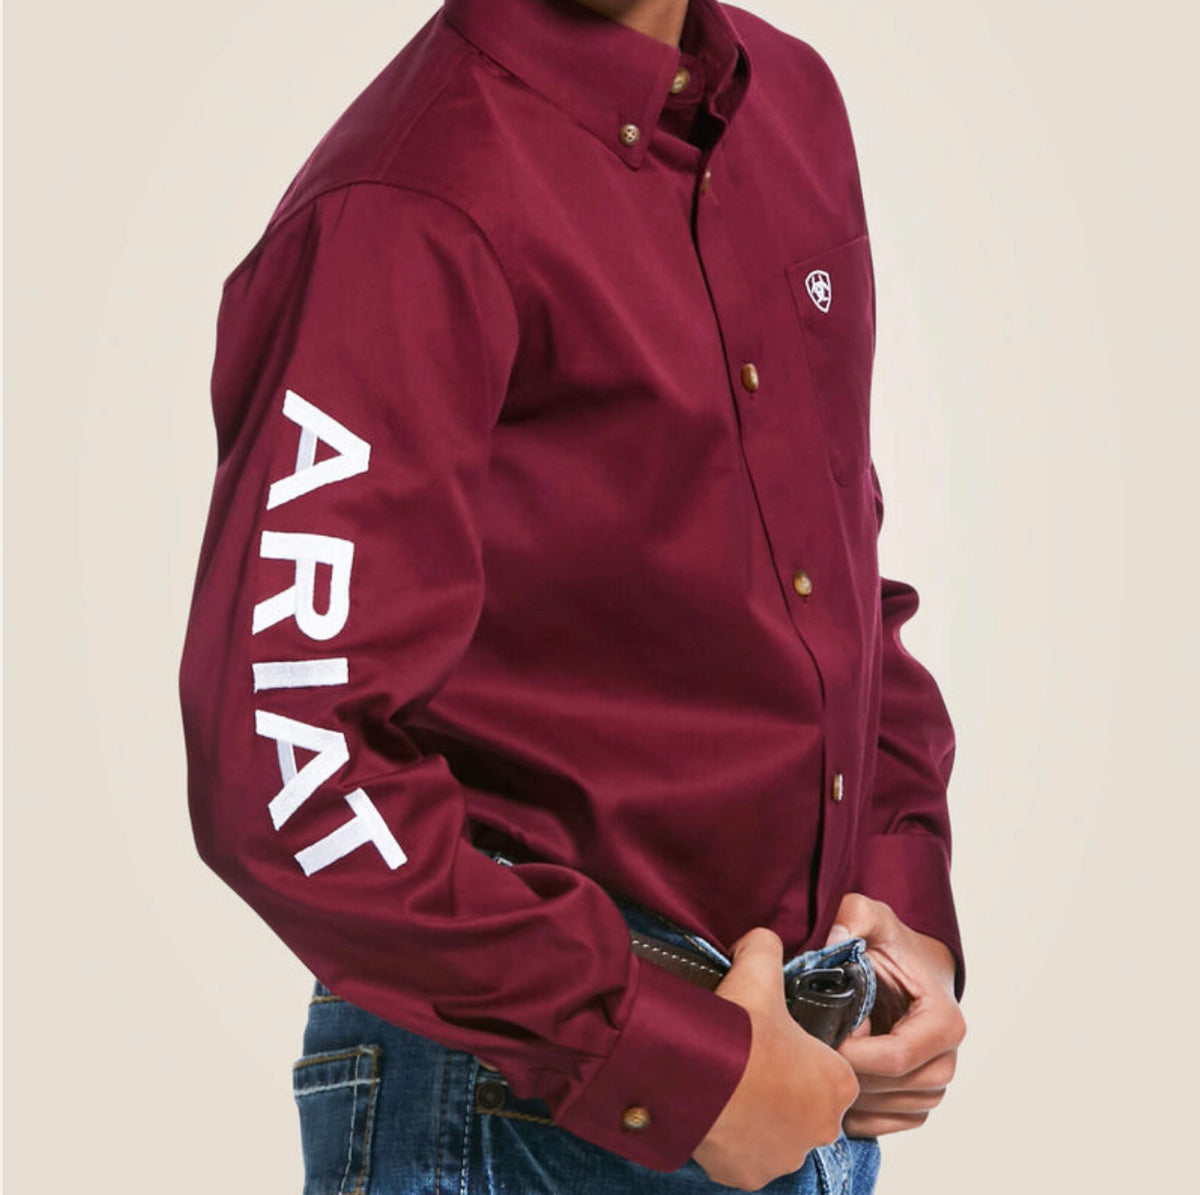 Ariat: Men's Team Logo Twill Burgundy/White Fitted LS Shirt